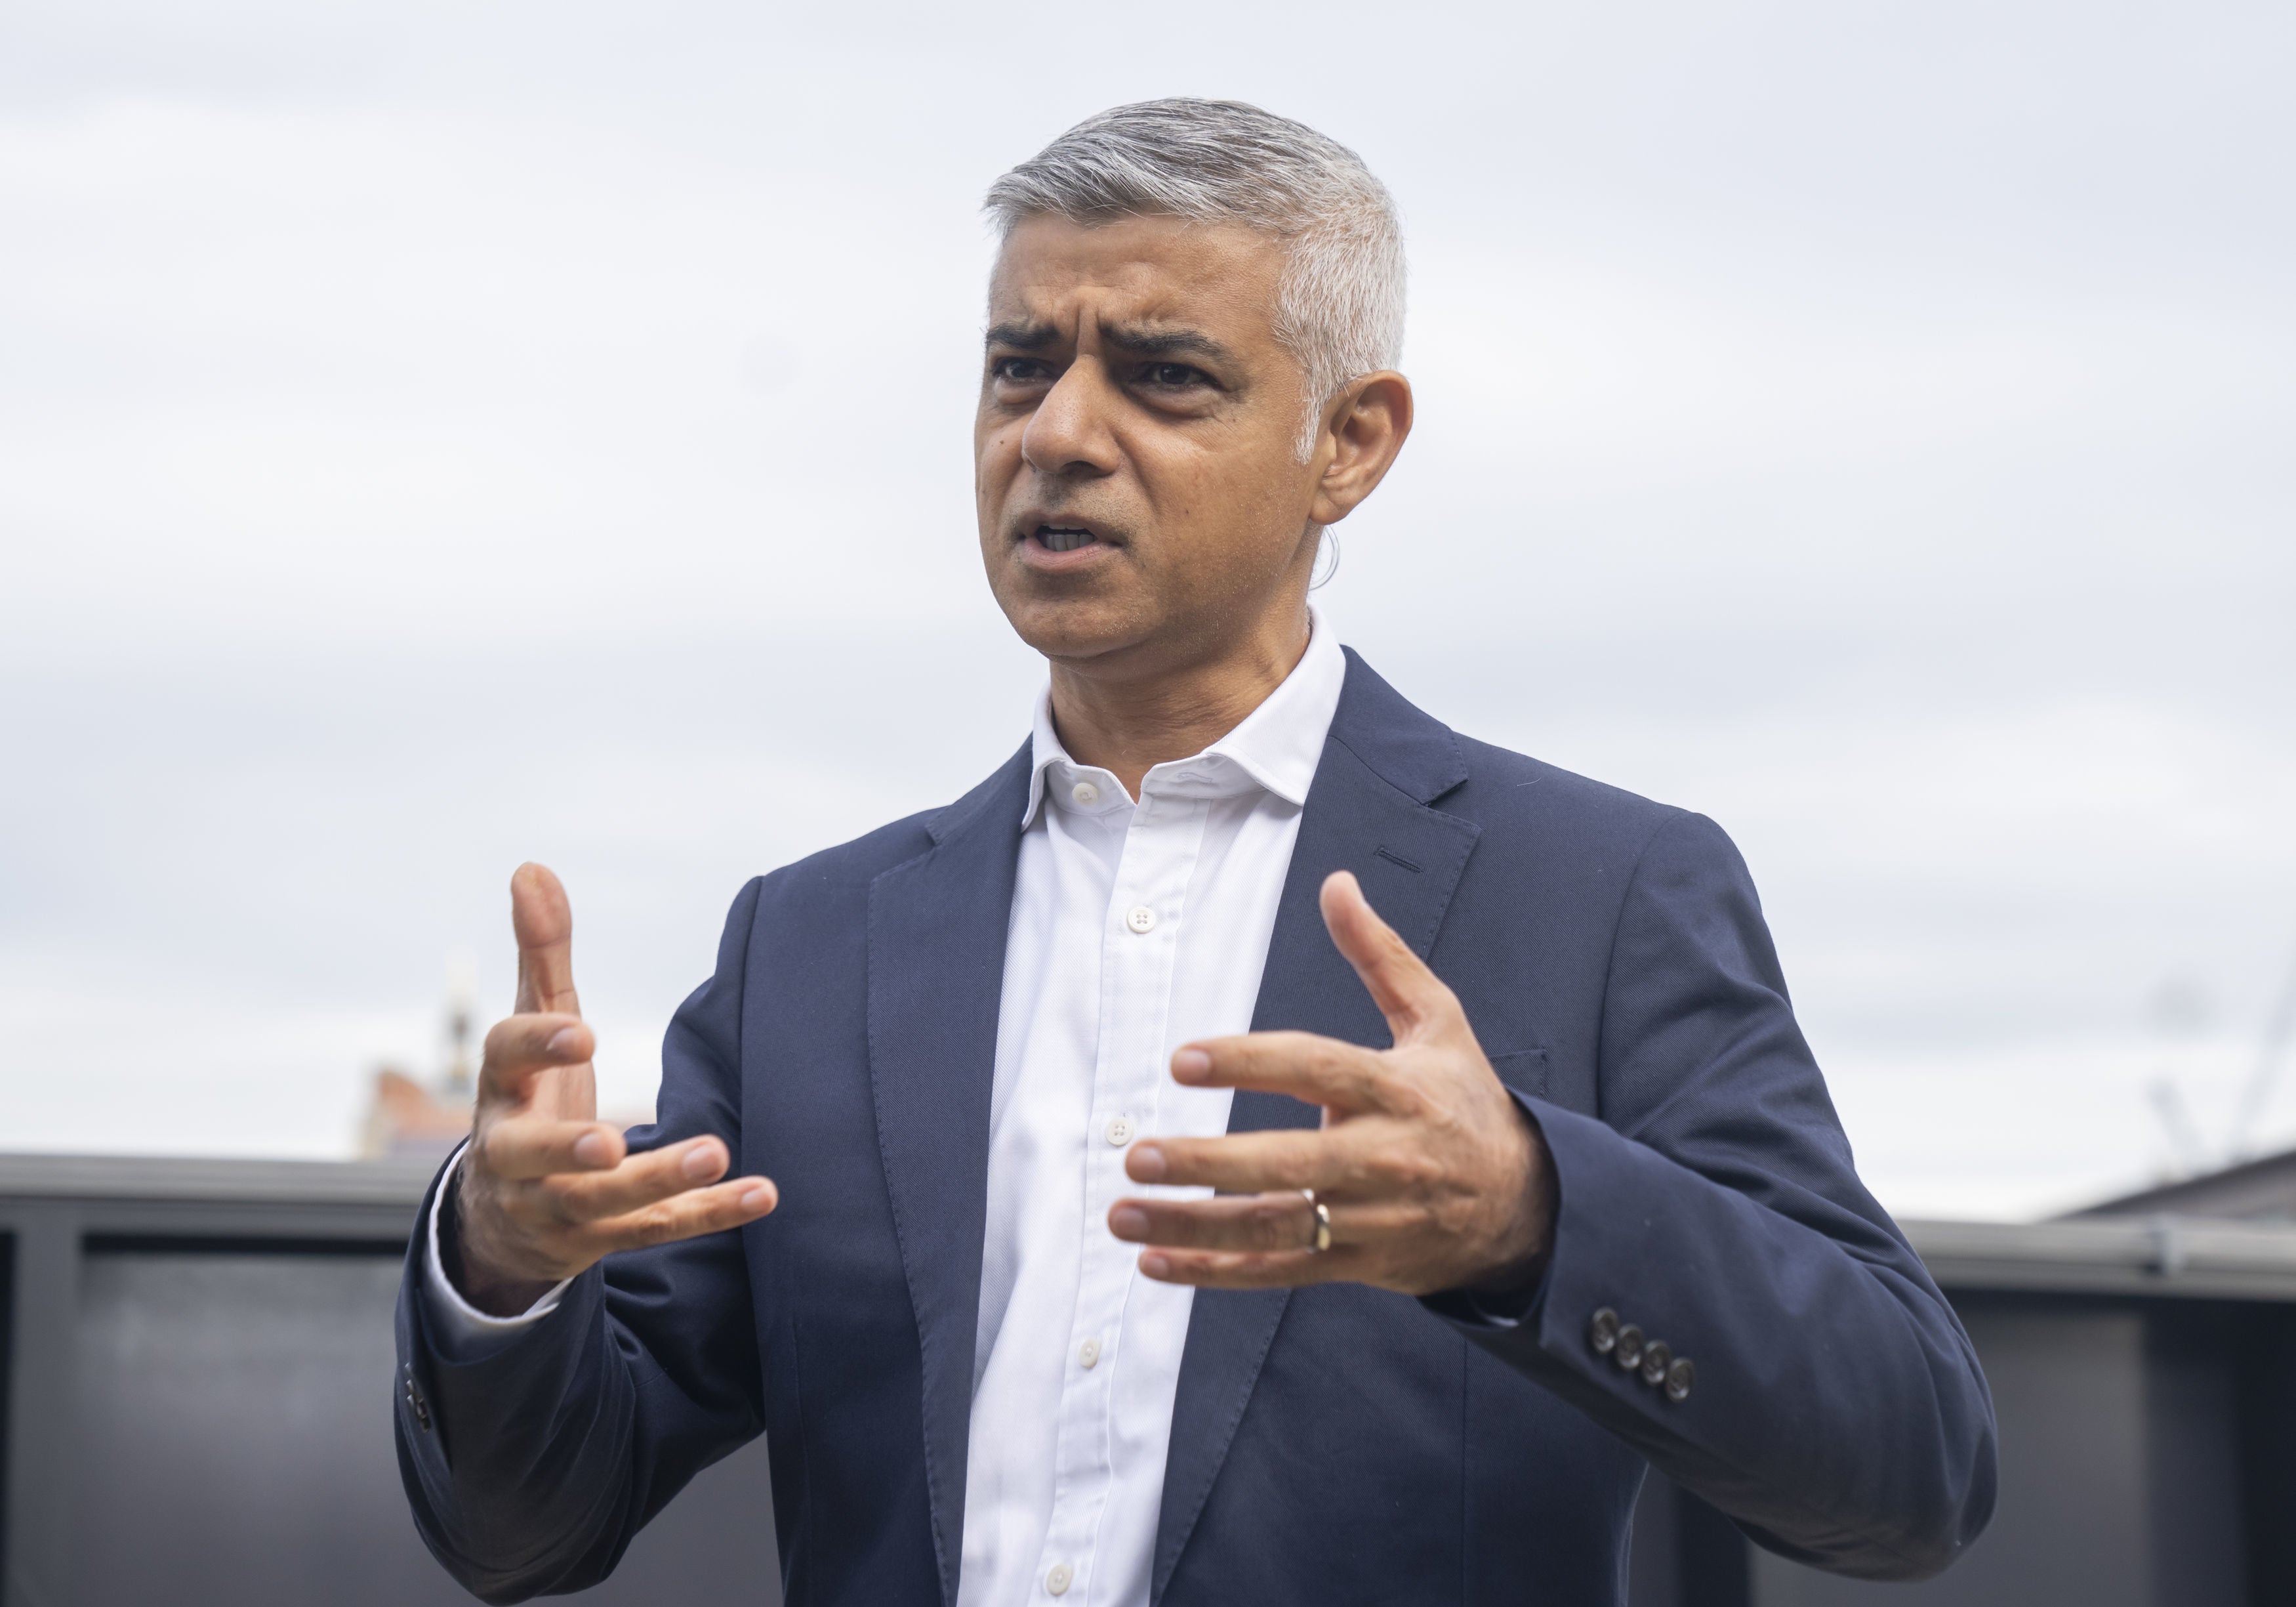 Mayor of London Sadiq Khan said report showed ‘Brexit isn’t working’